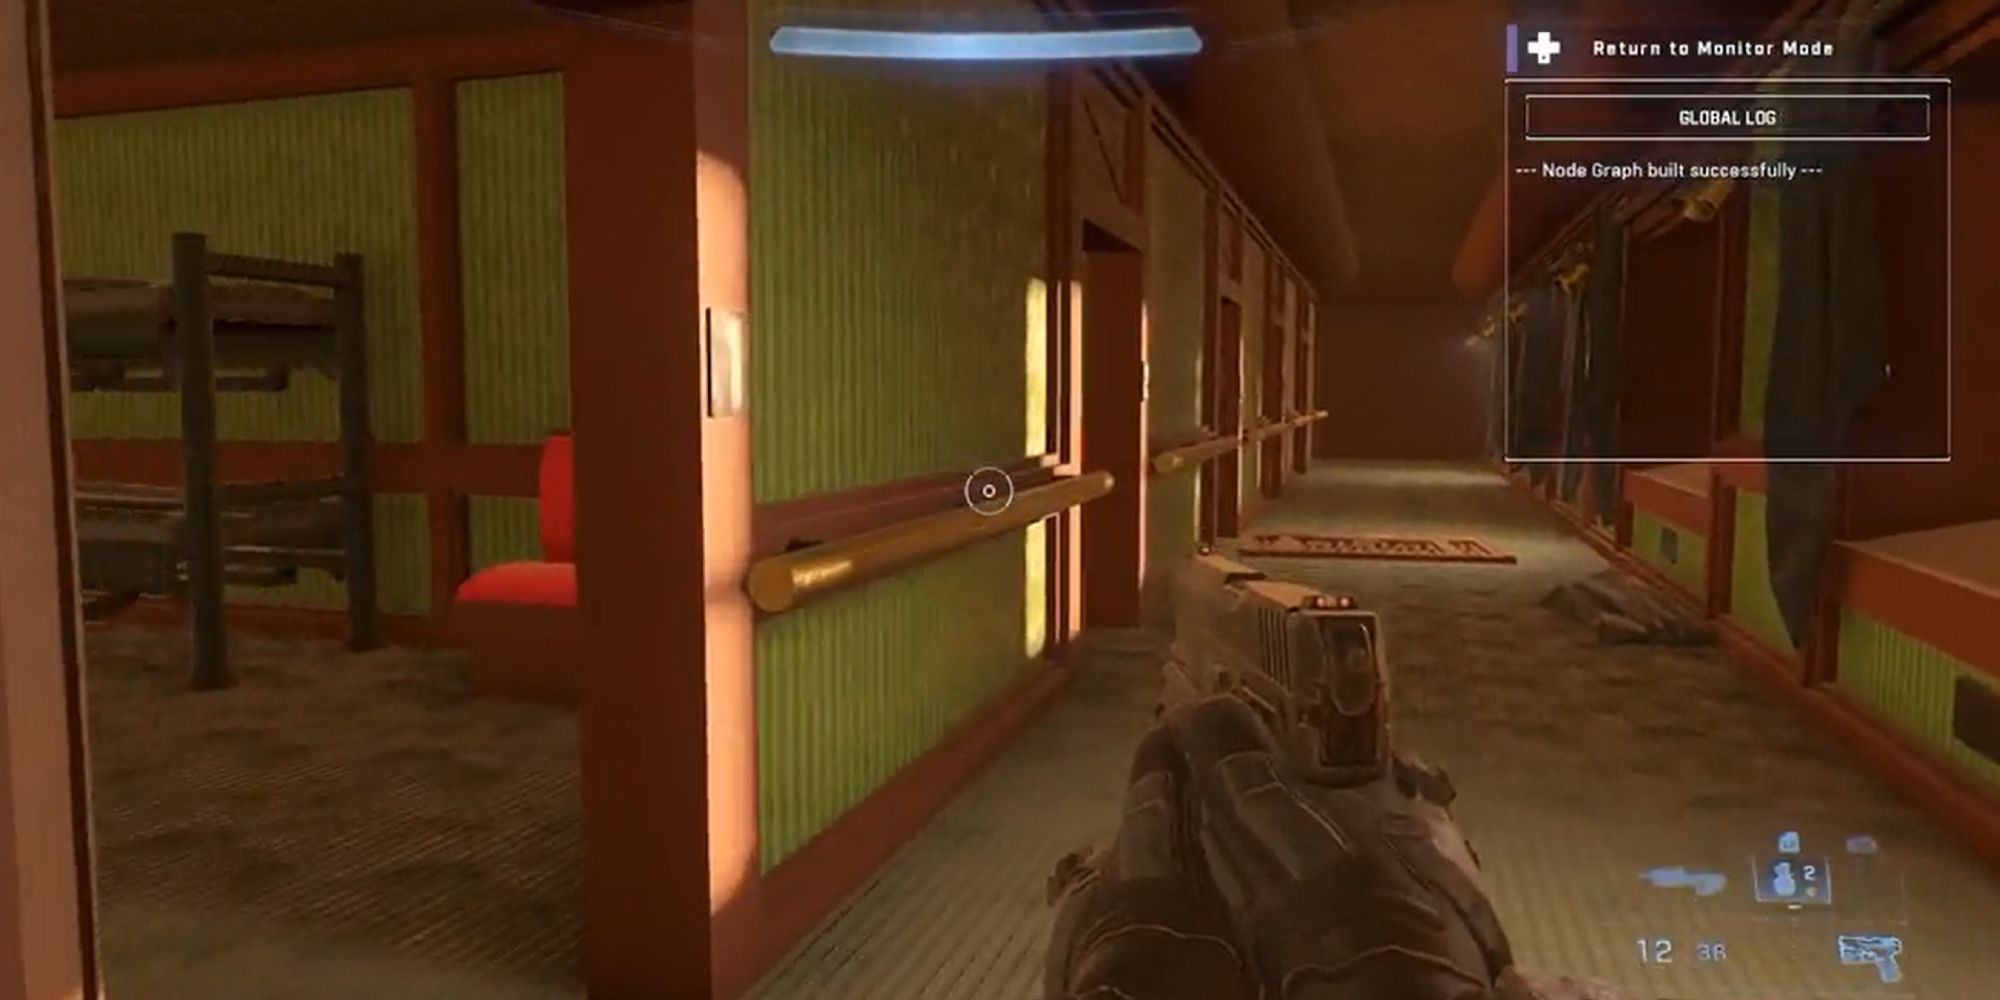 Halo Infinite player in the corridor of a train